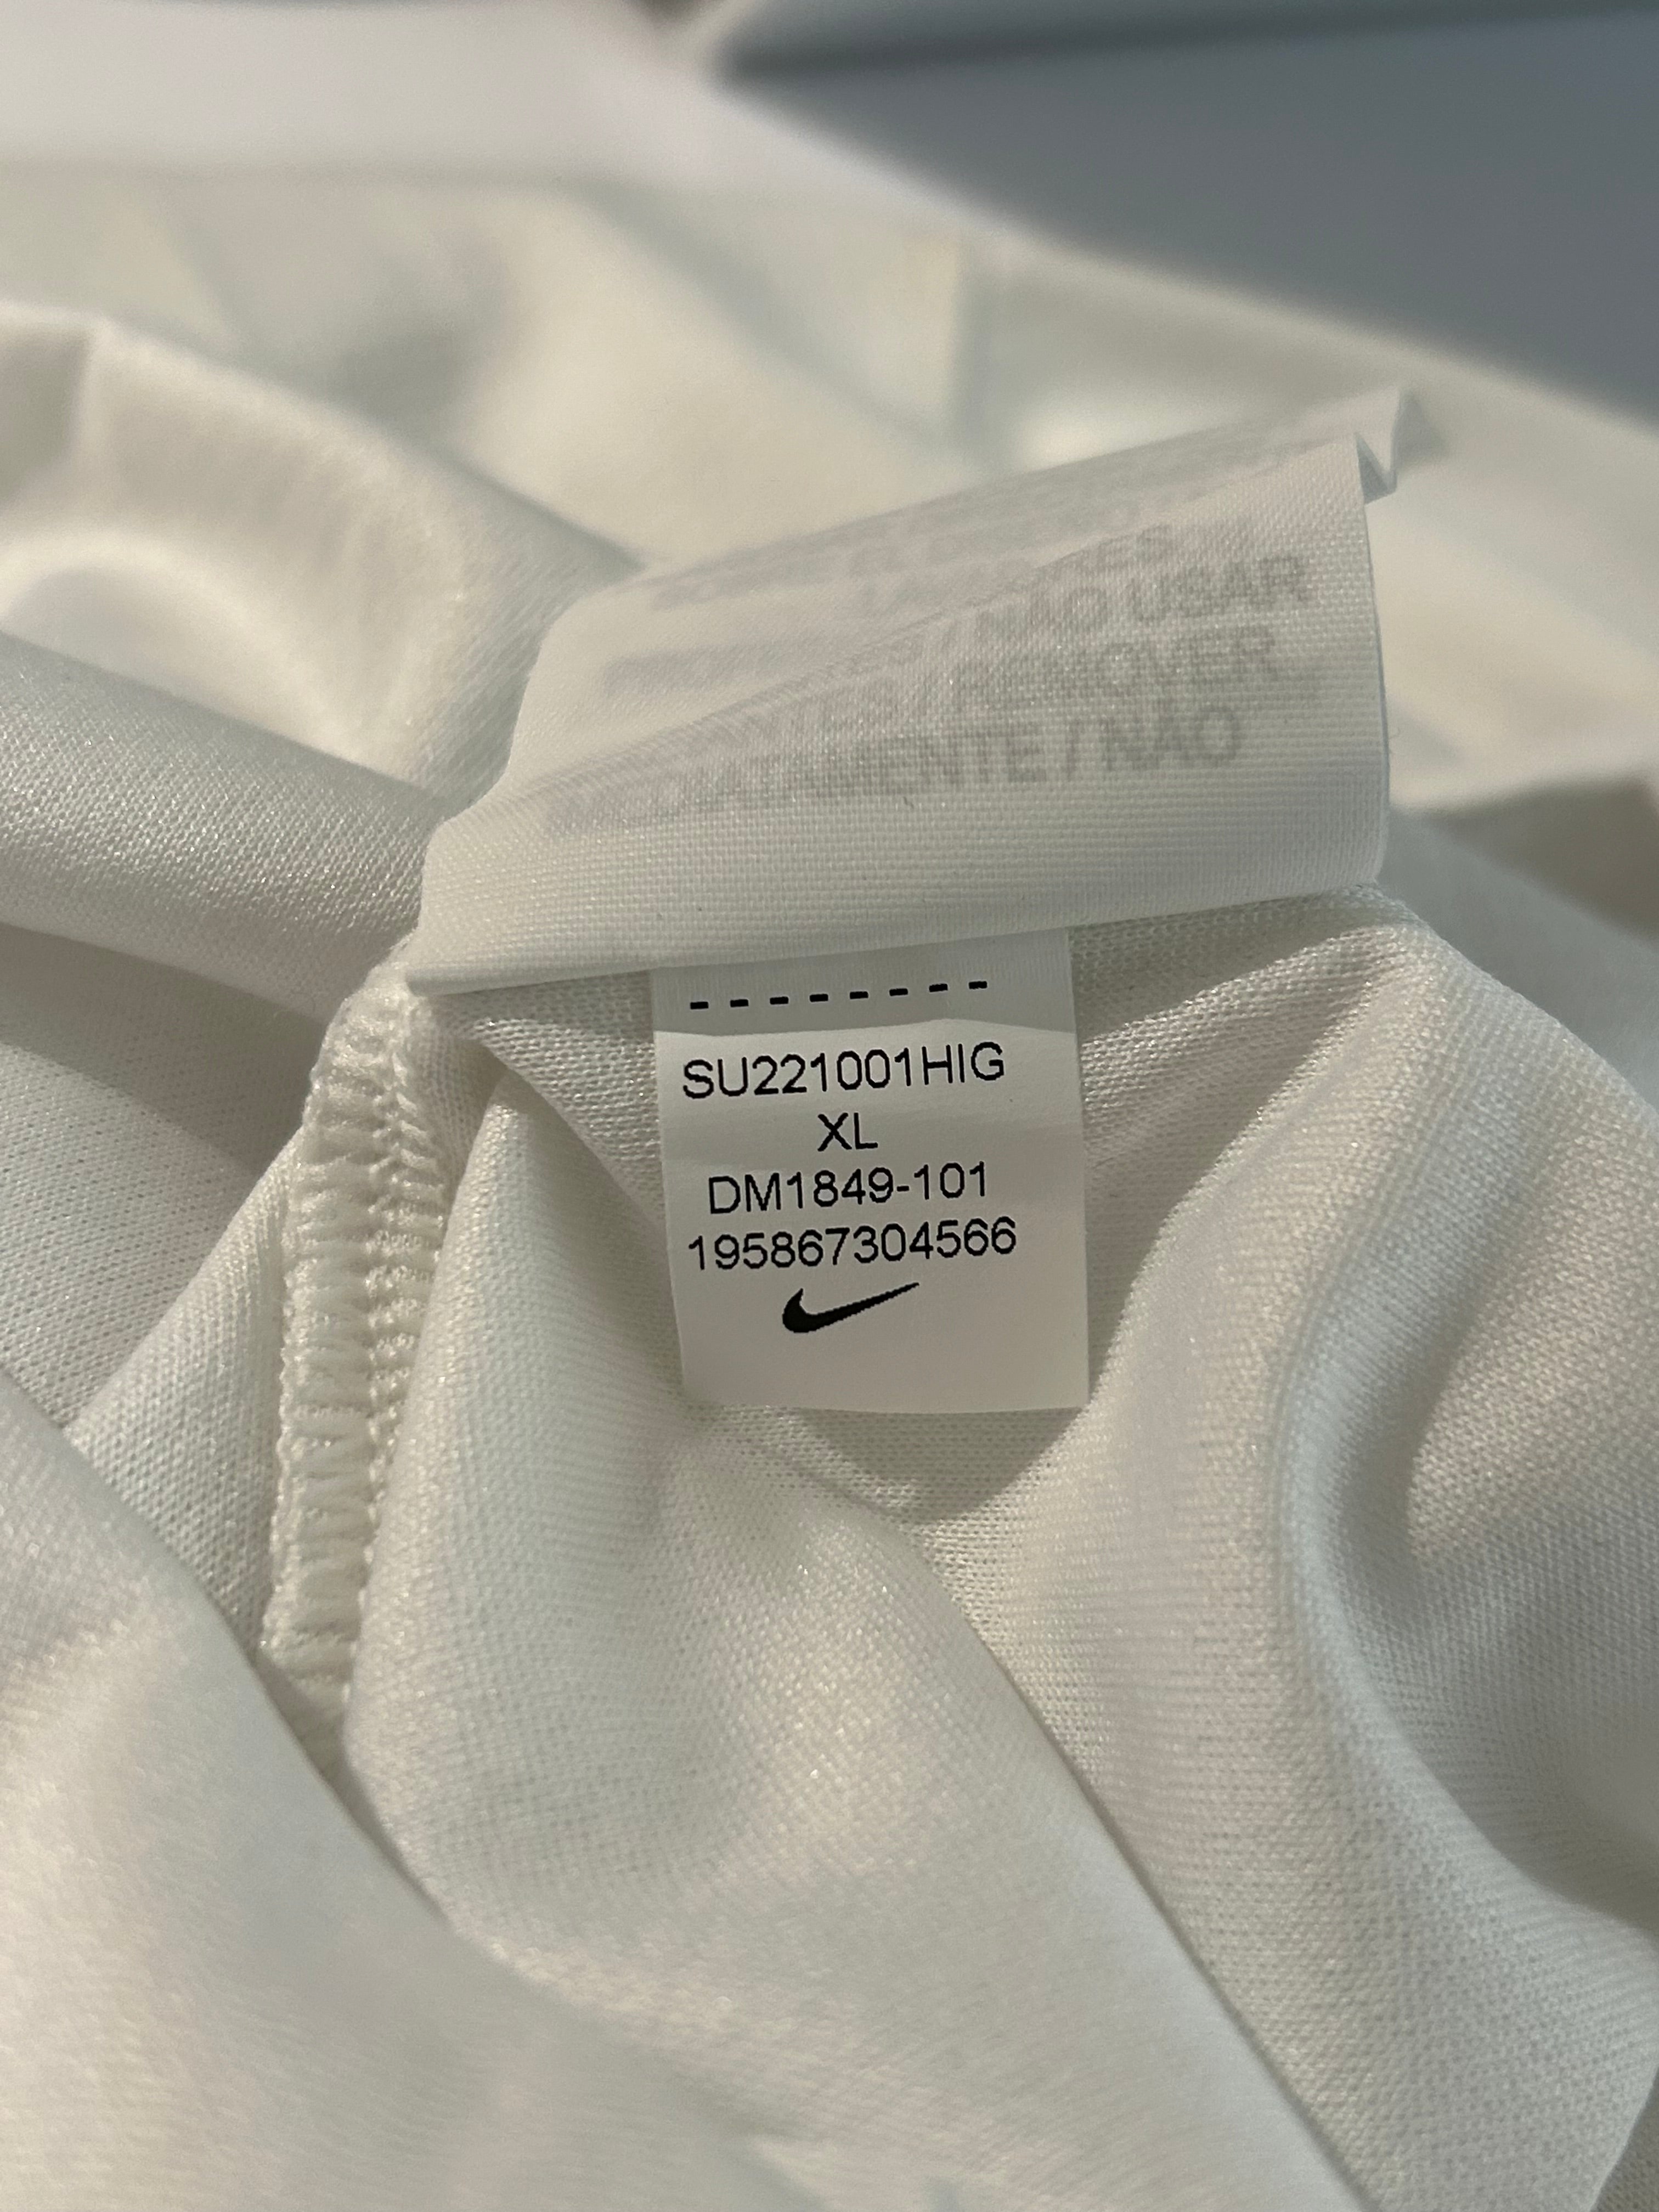 Nike - Tottenham Hotspur 2022/23 Home Football Shirt 'KANE'